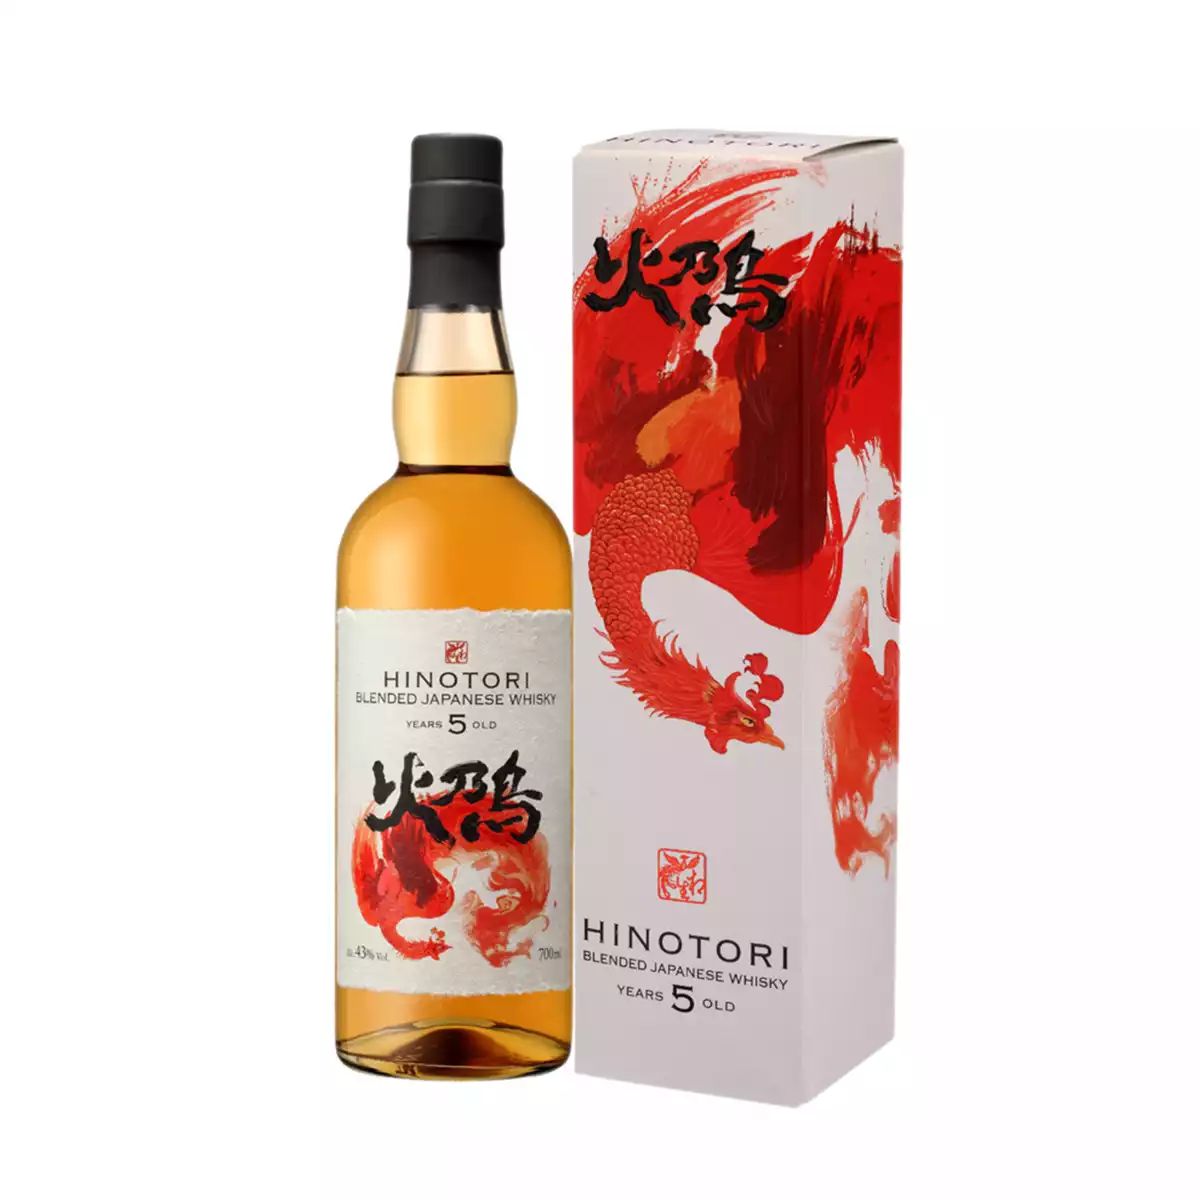 5 y.o. Blended Japanese Whisky